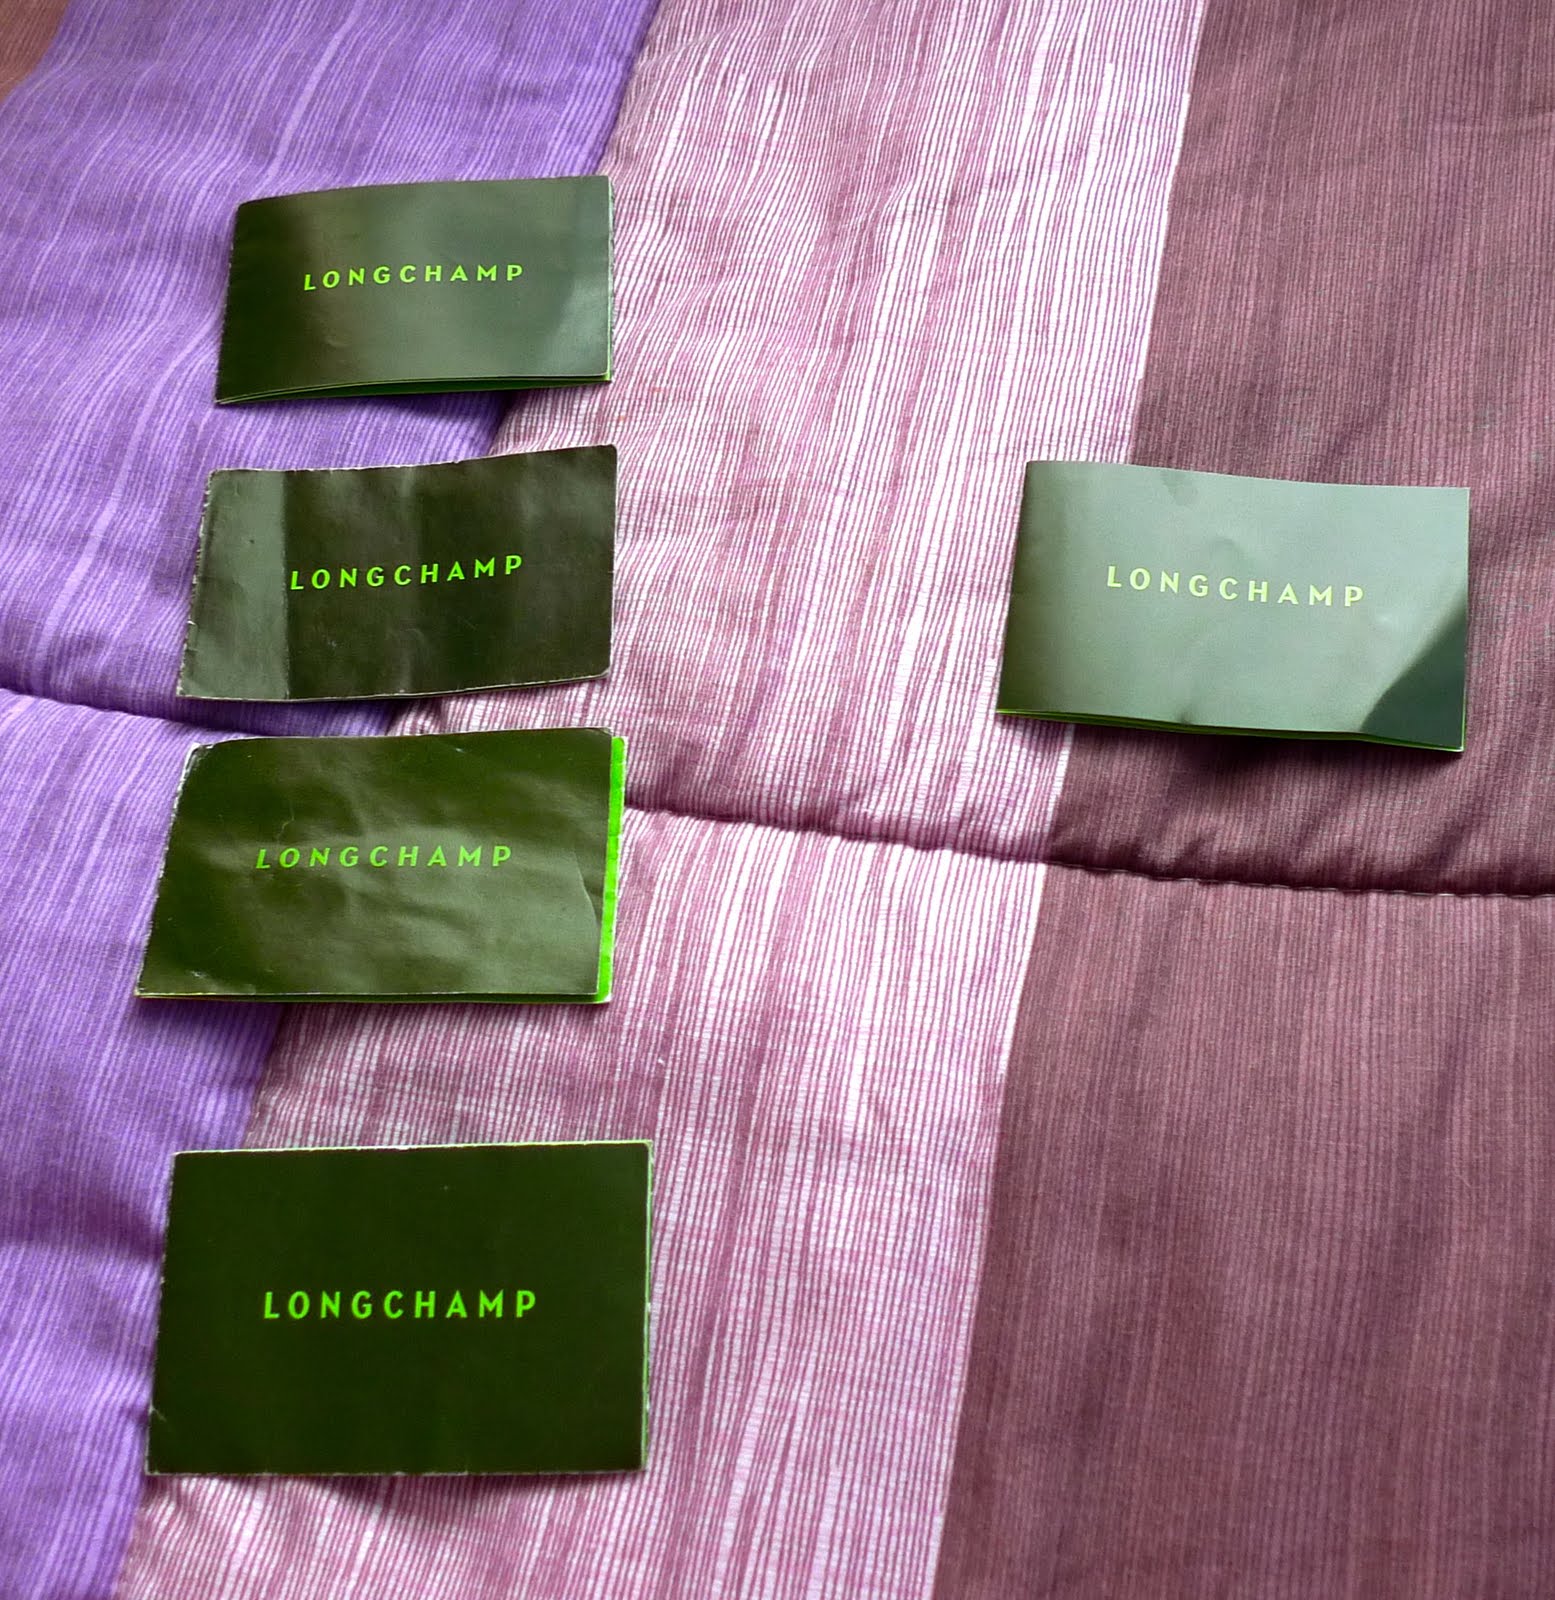 greenscreen yes, i am really loving this Longchamp bag!! 🔗 as